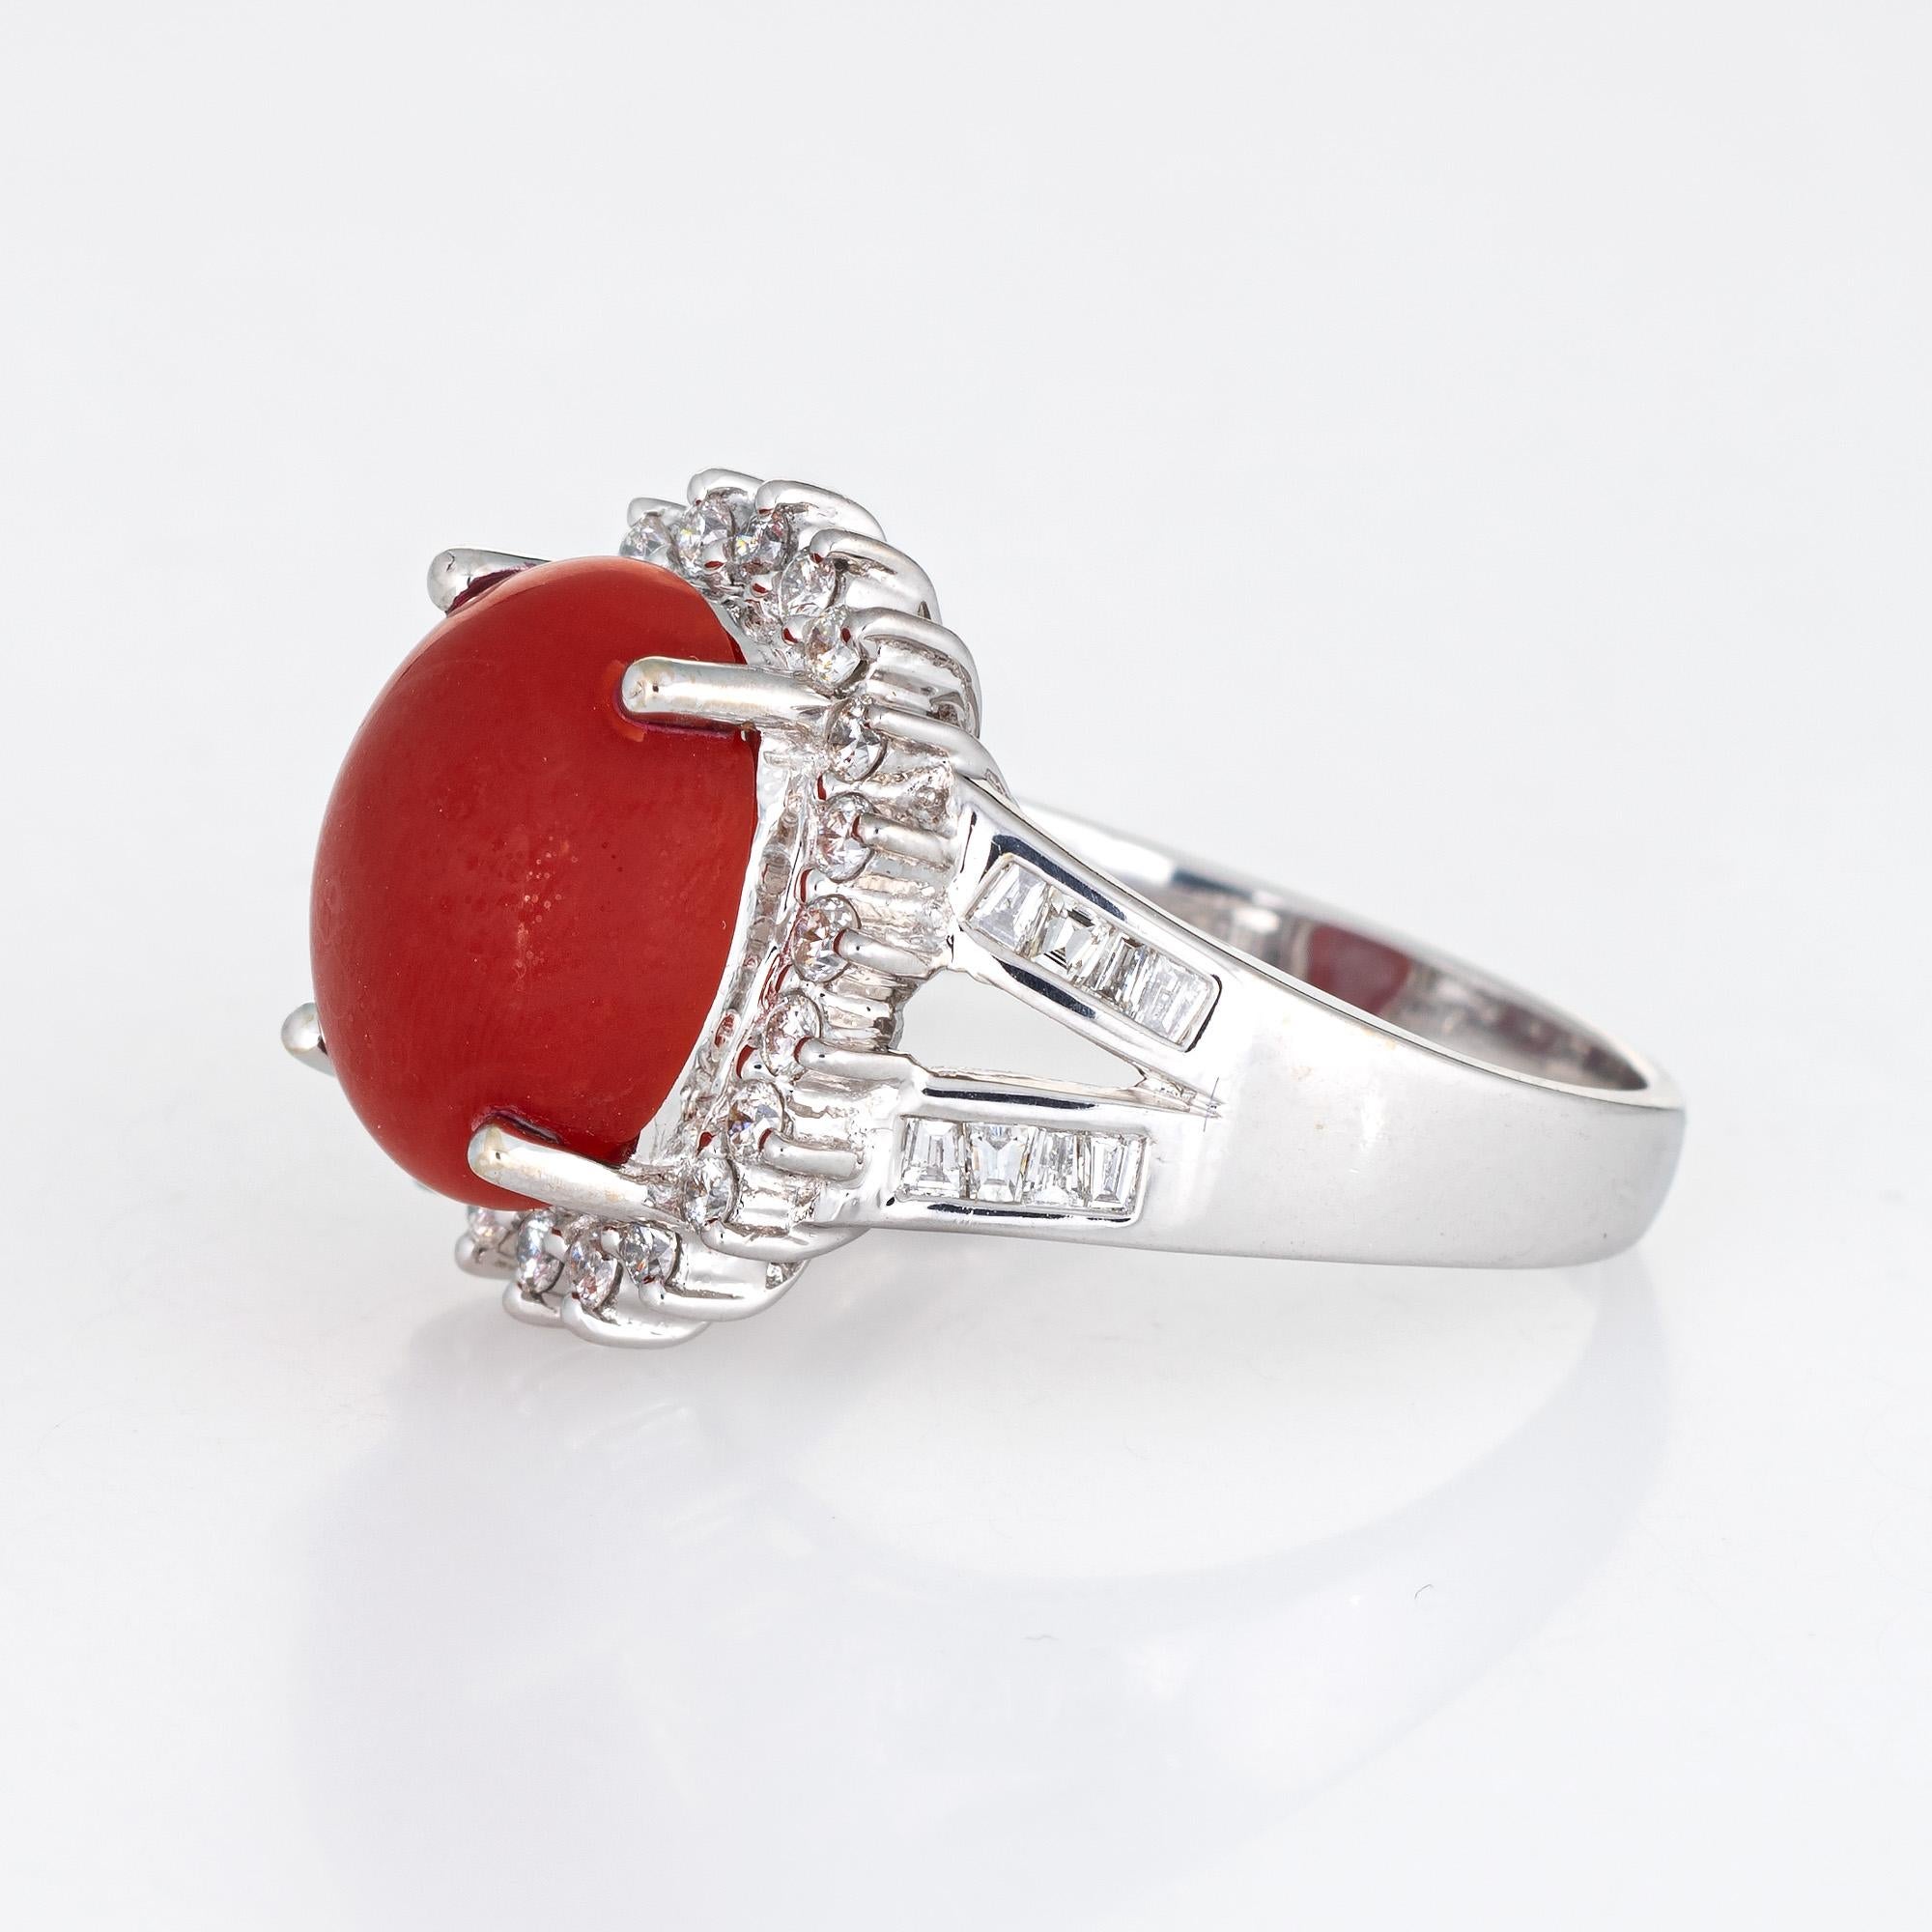 Cabochon Sardinian Red Coral Diamond Ring Estate 18k White Gold Princess Style Jewelry